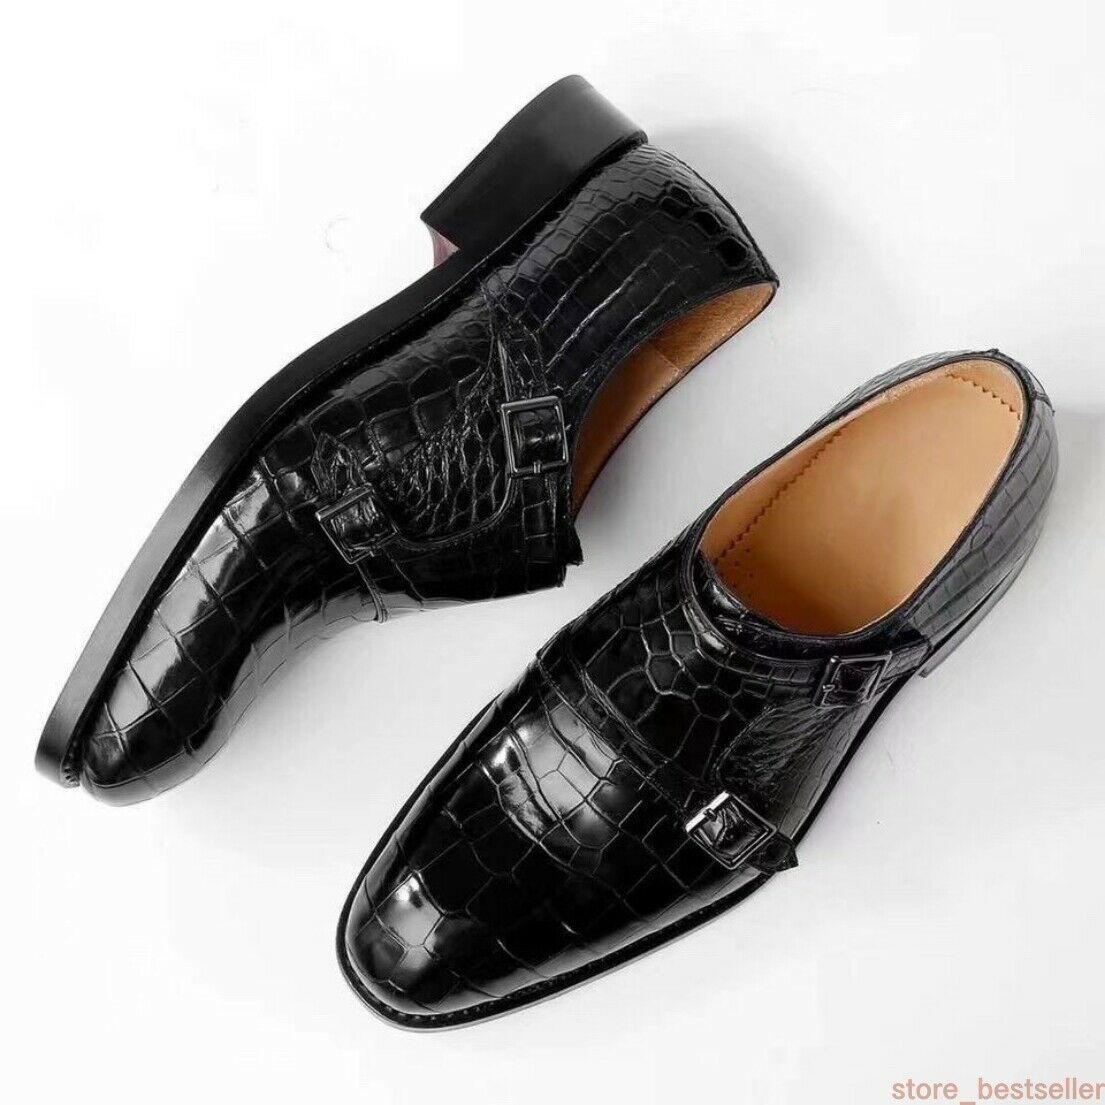 Crocodile Alligator Leather Double Monk Strap Dress Shoes Oxford Formal Business Shoes-Black